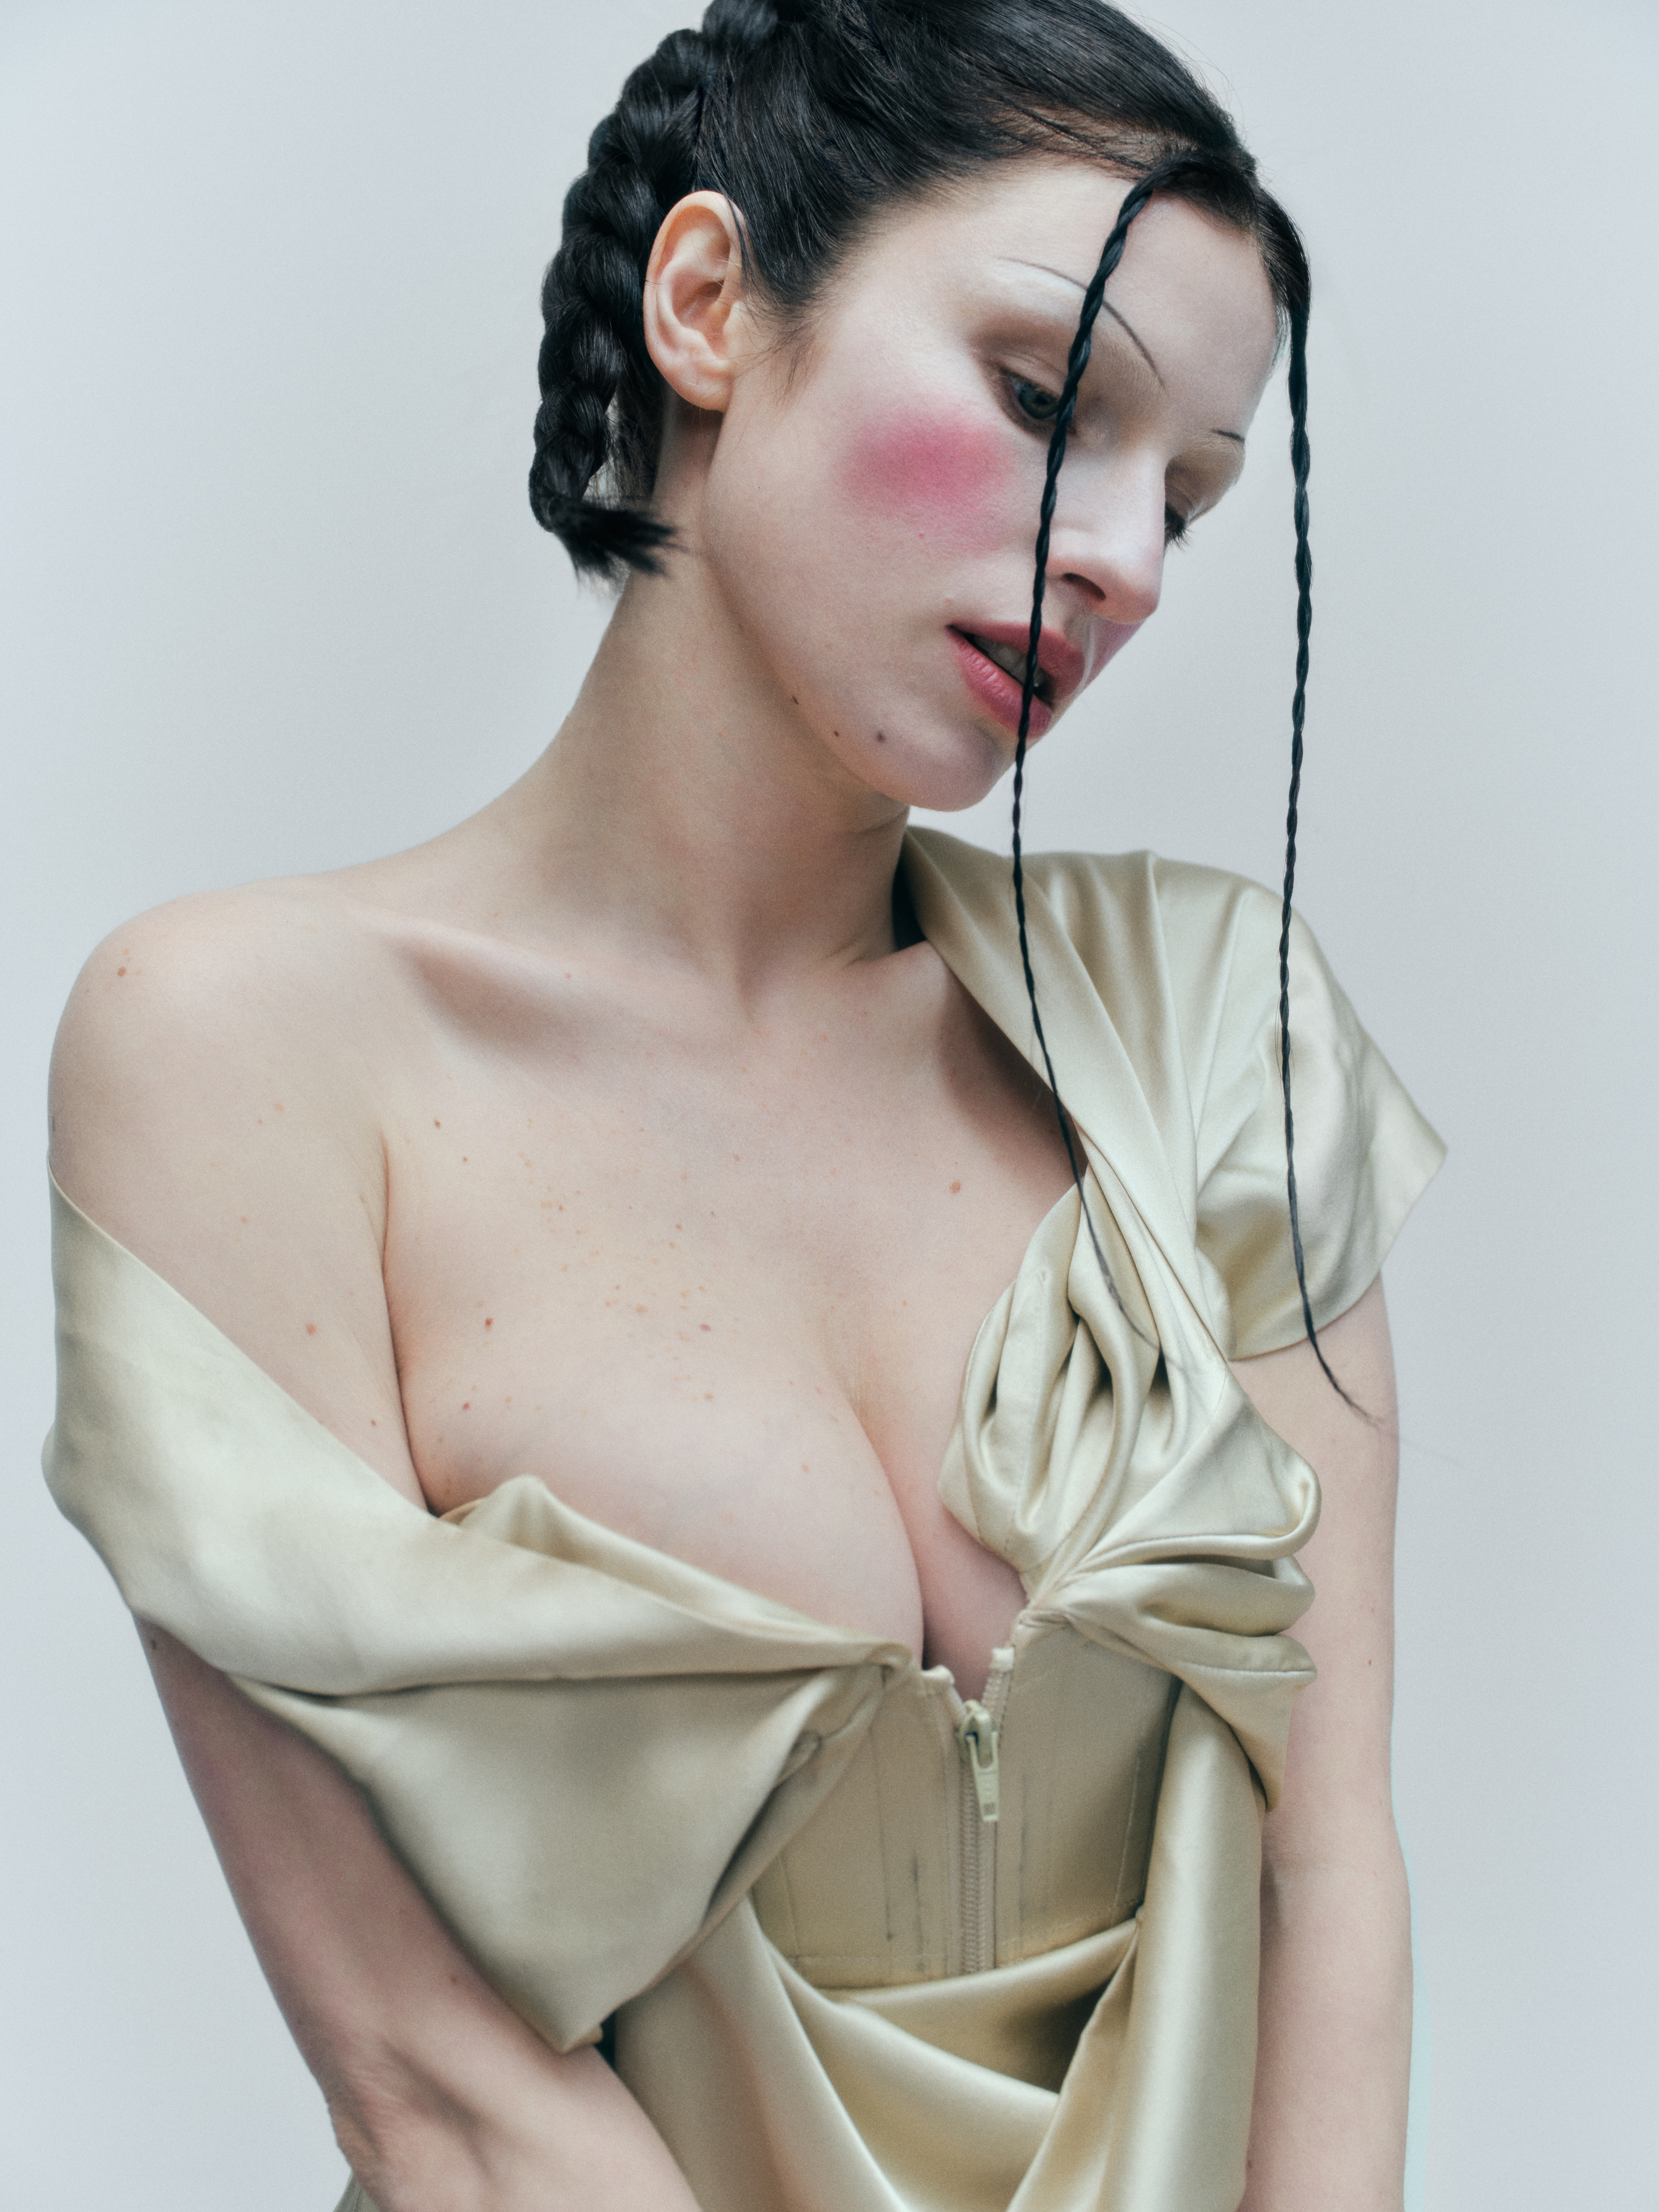 Tali Lennox shot by Oliva Malone, styling Carolina Orrico